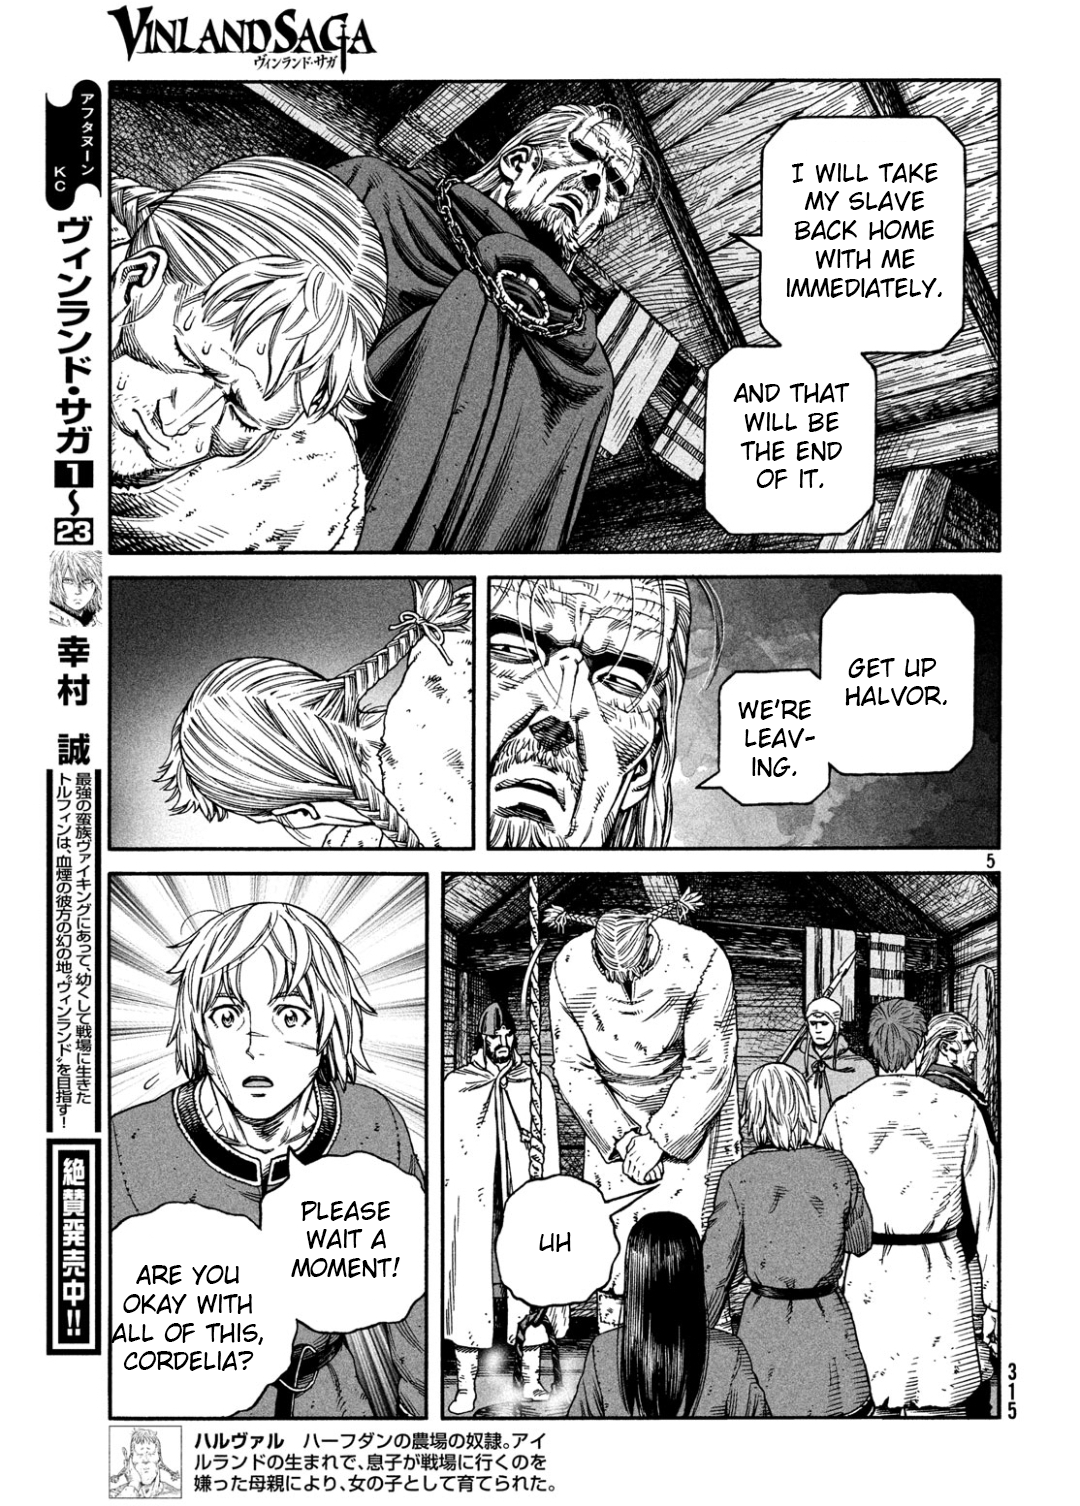 Vinland Saga Manga Manga Chapter - 170 - image 6